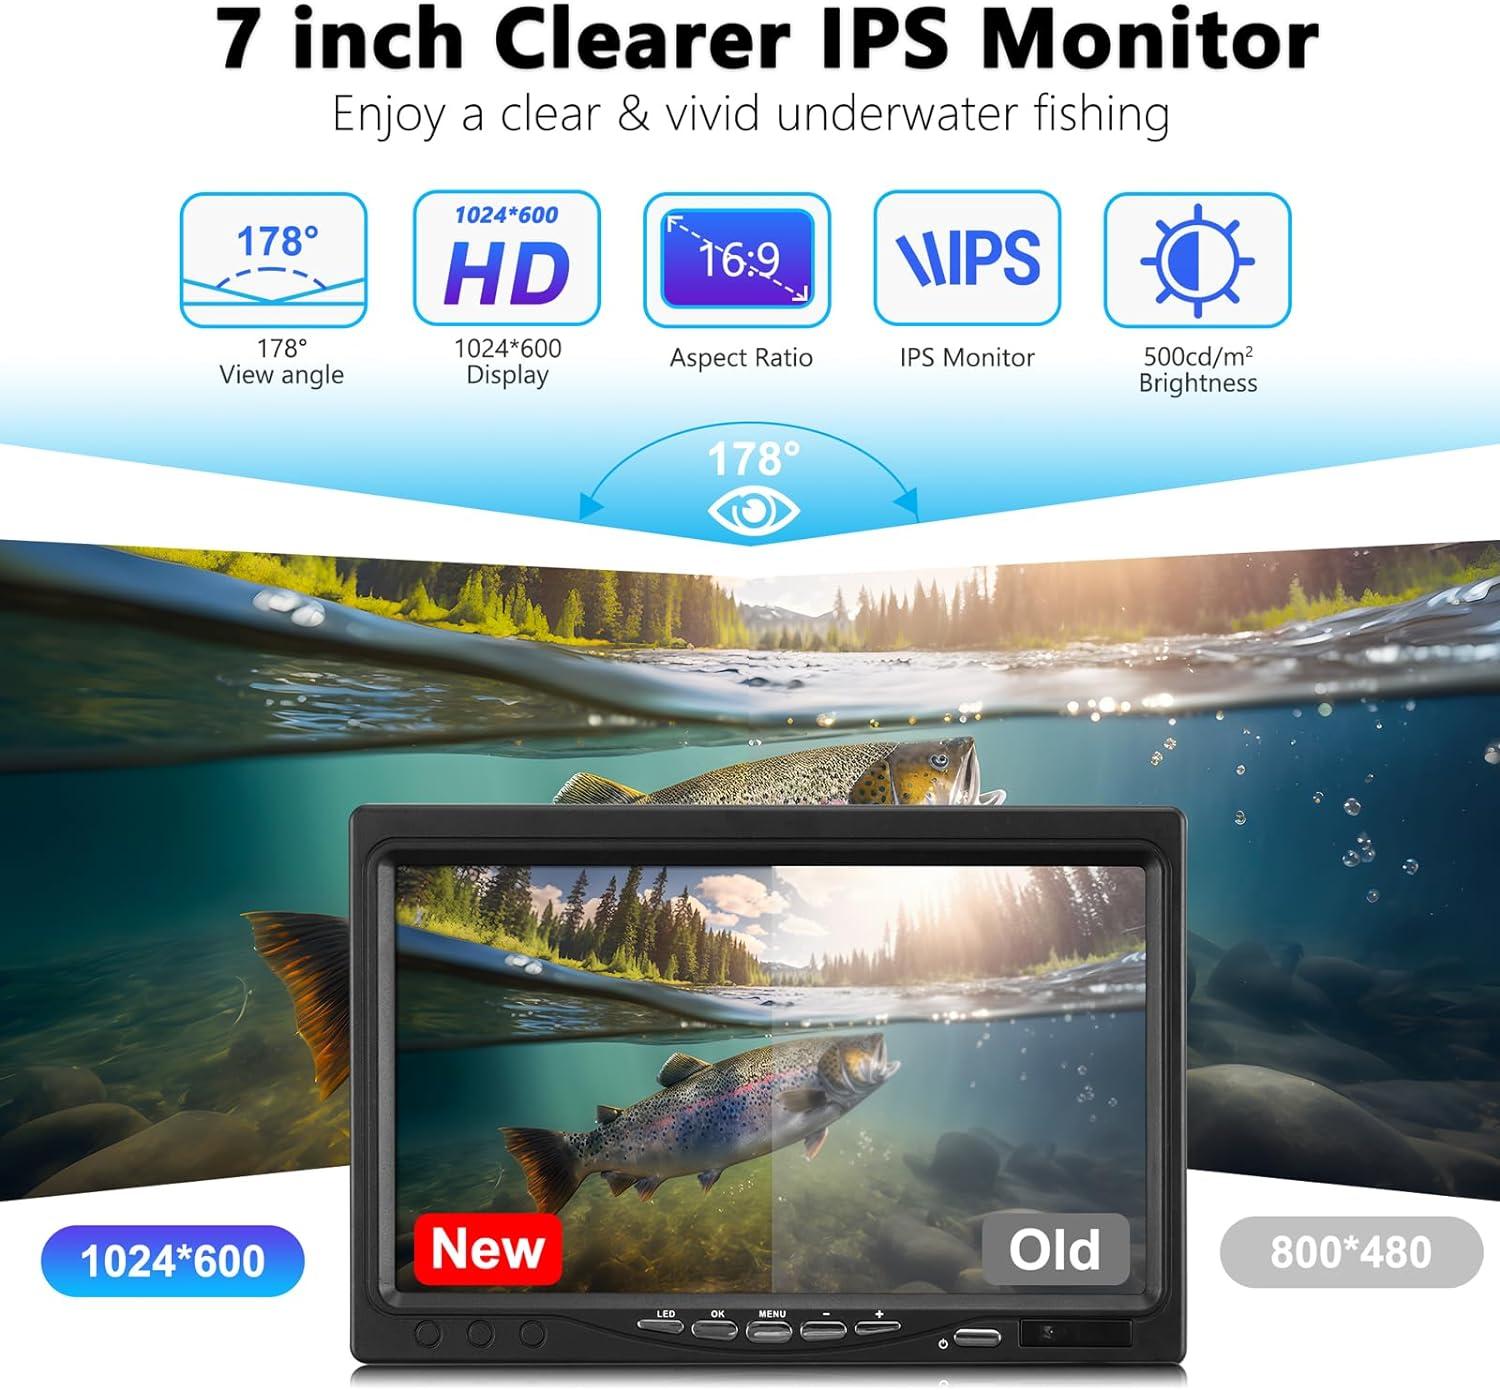 4.3inch Monitor 1000TVL Fish Finder Underwater Fishing Camera 180 Degrees  Fish Finder Camera